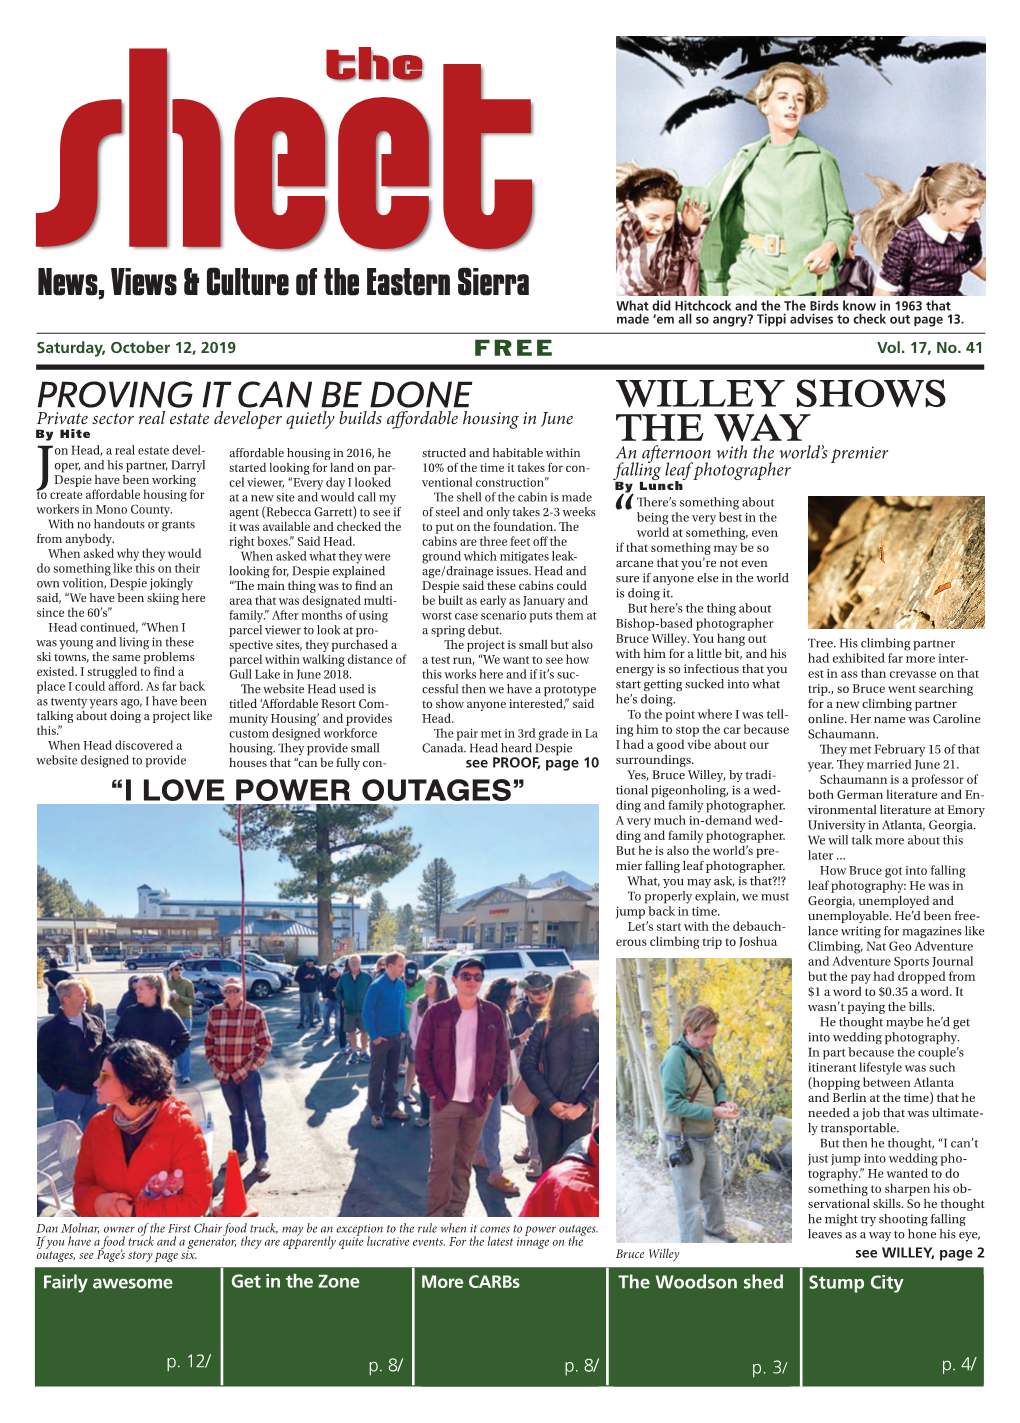 News, Views & Culture of the Eastern Sierra